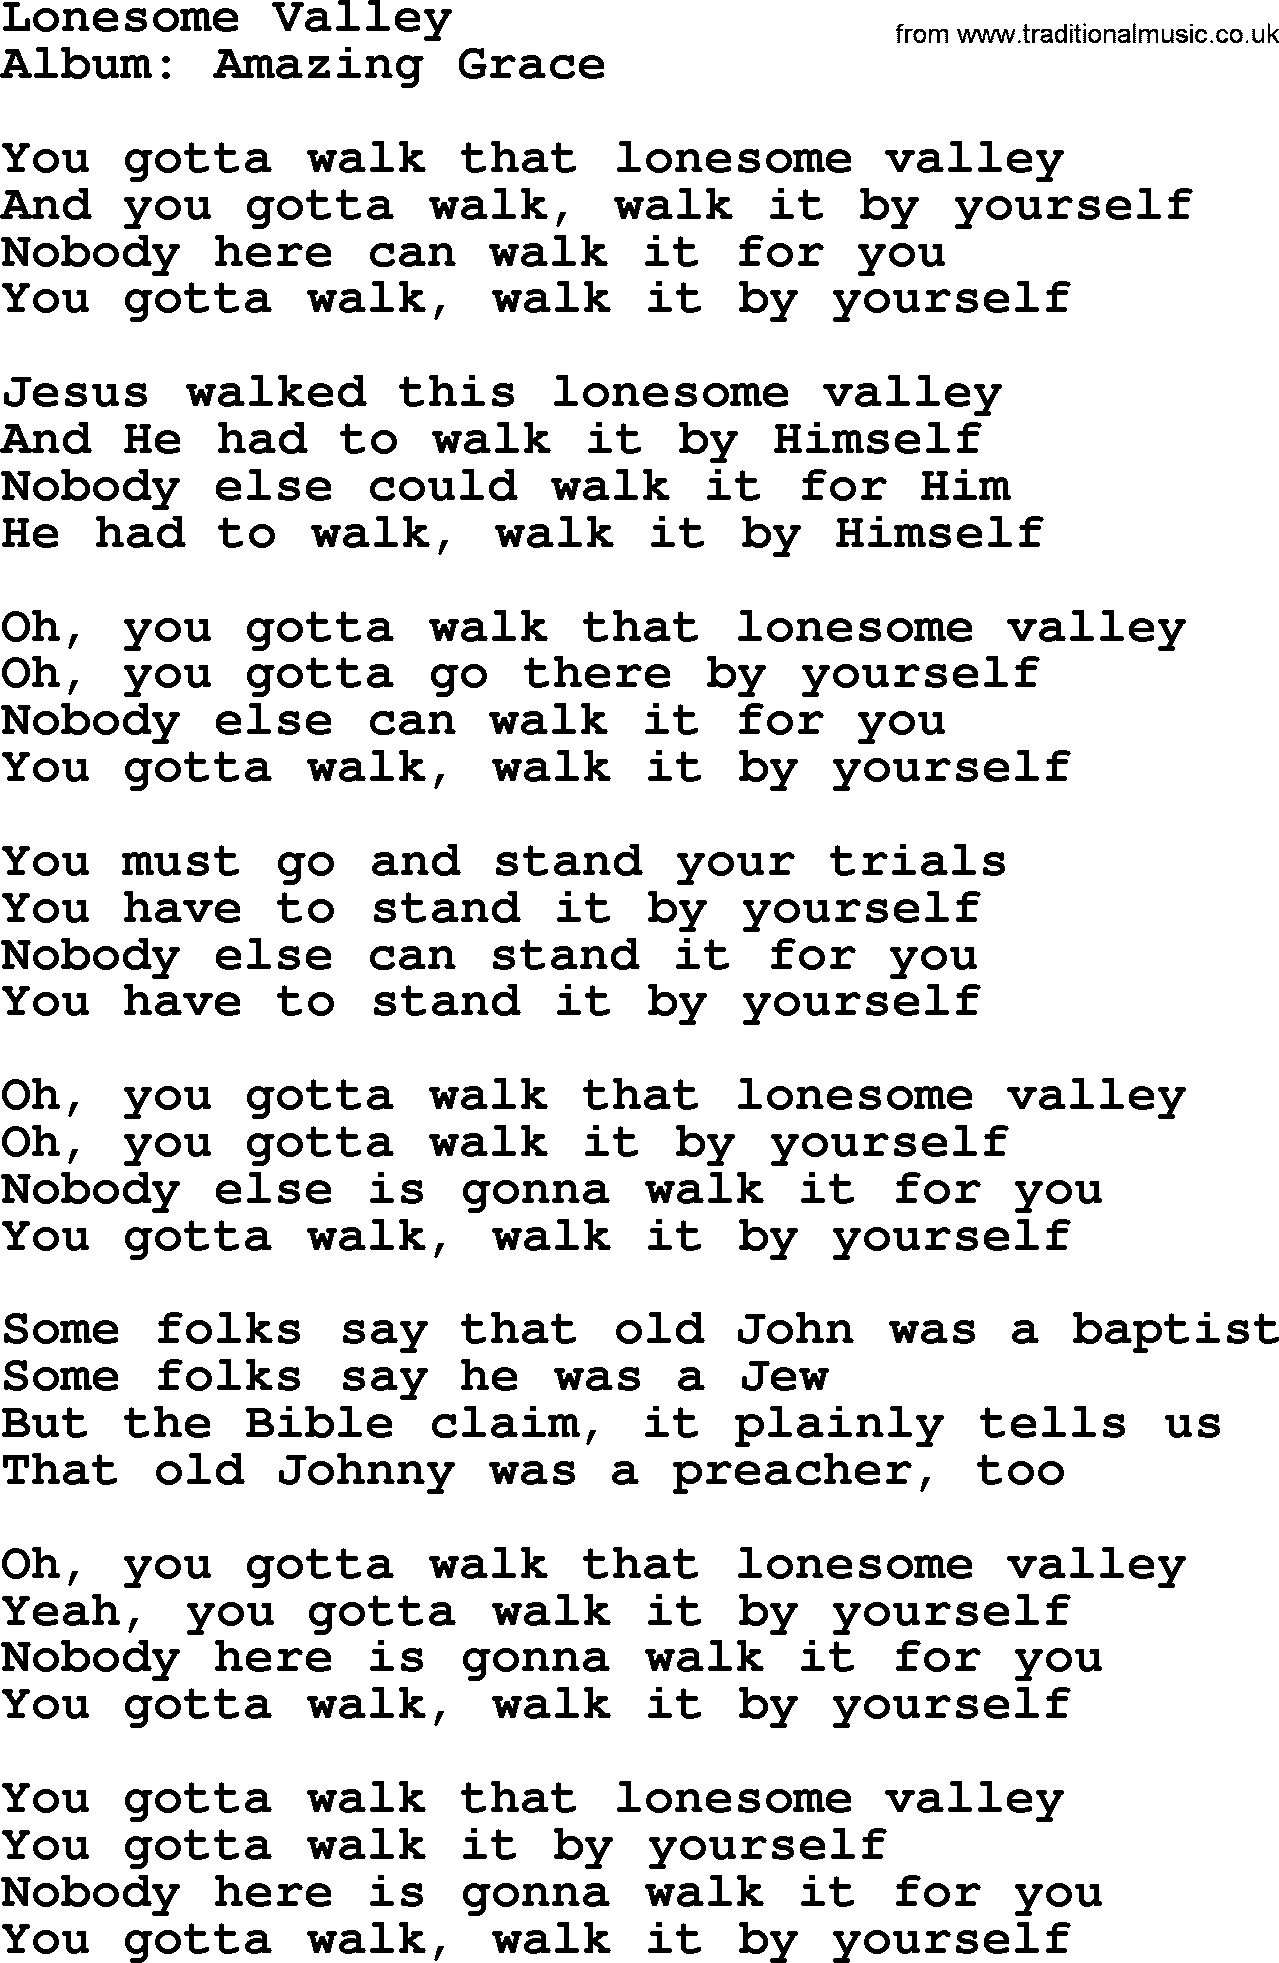 George Jones song: Lonesome Valley, lyrics